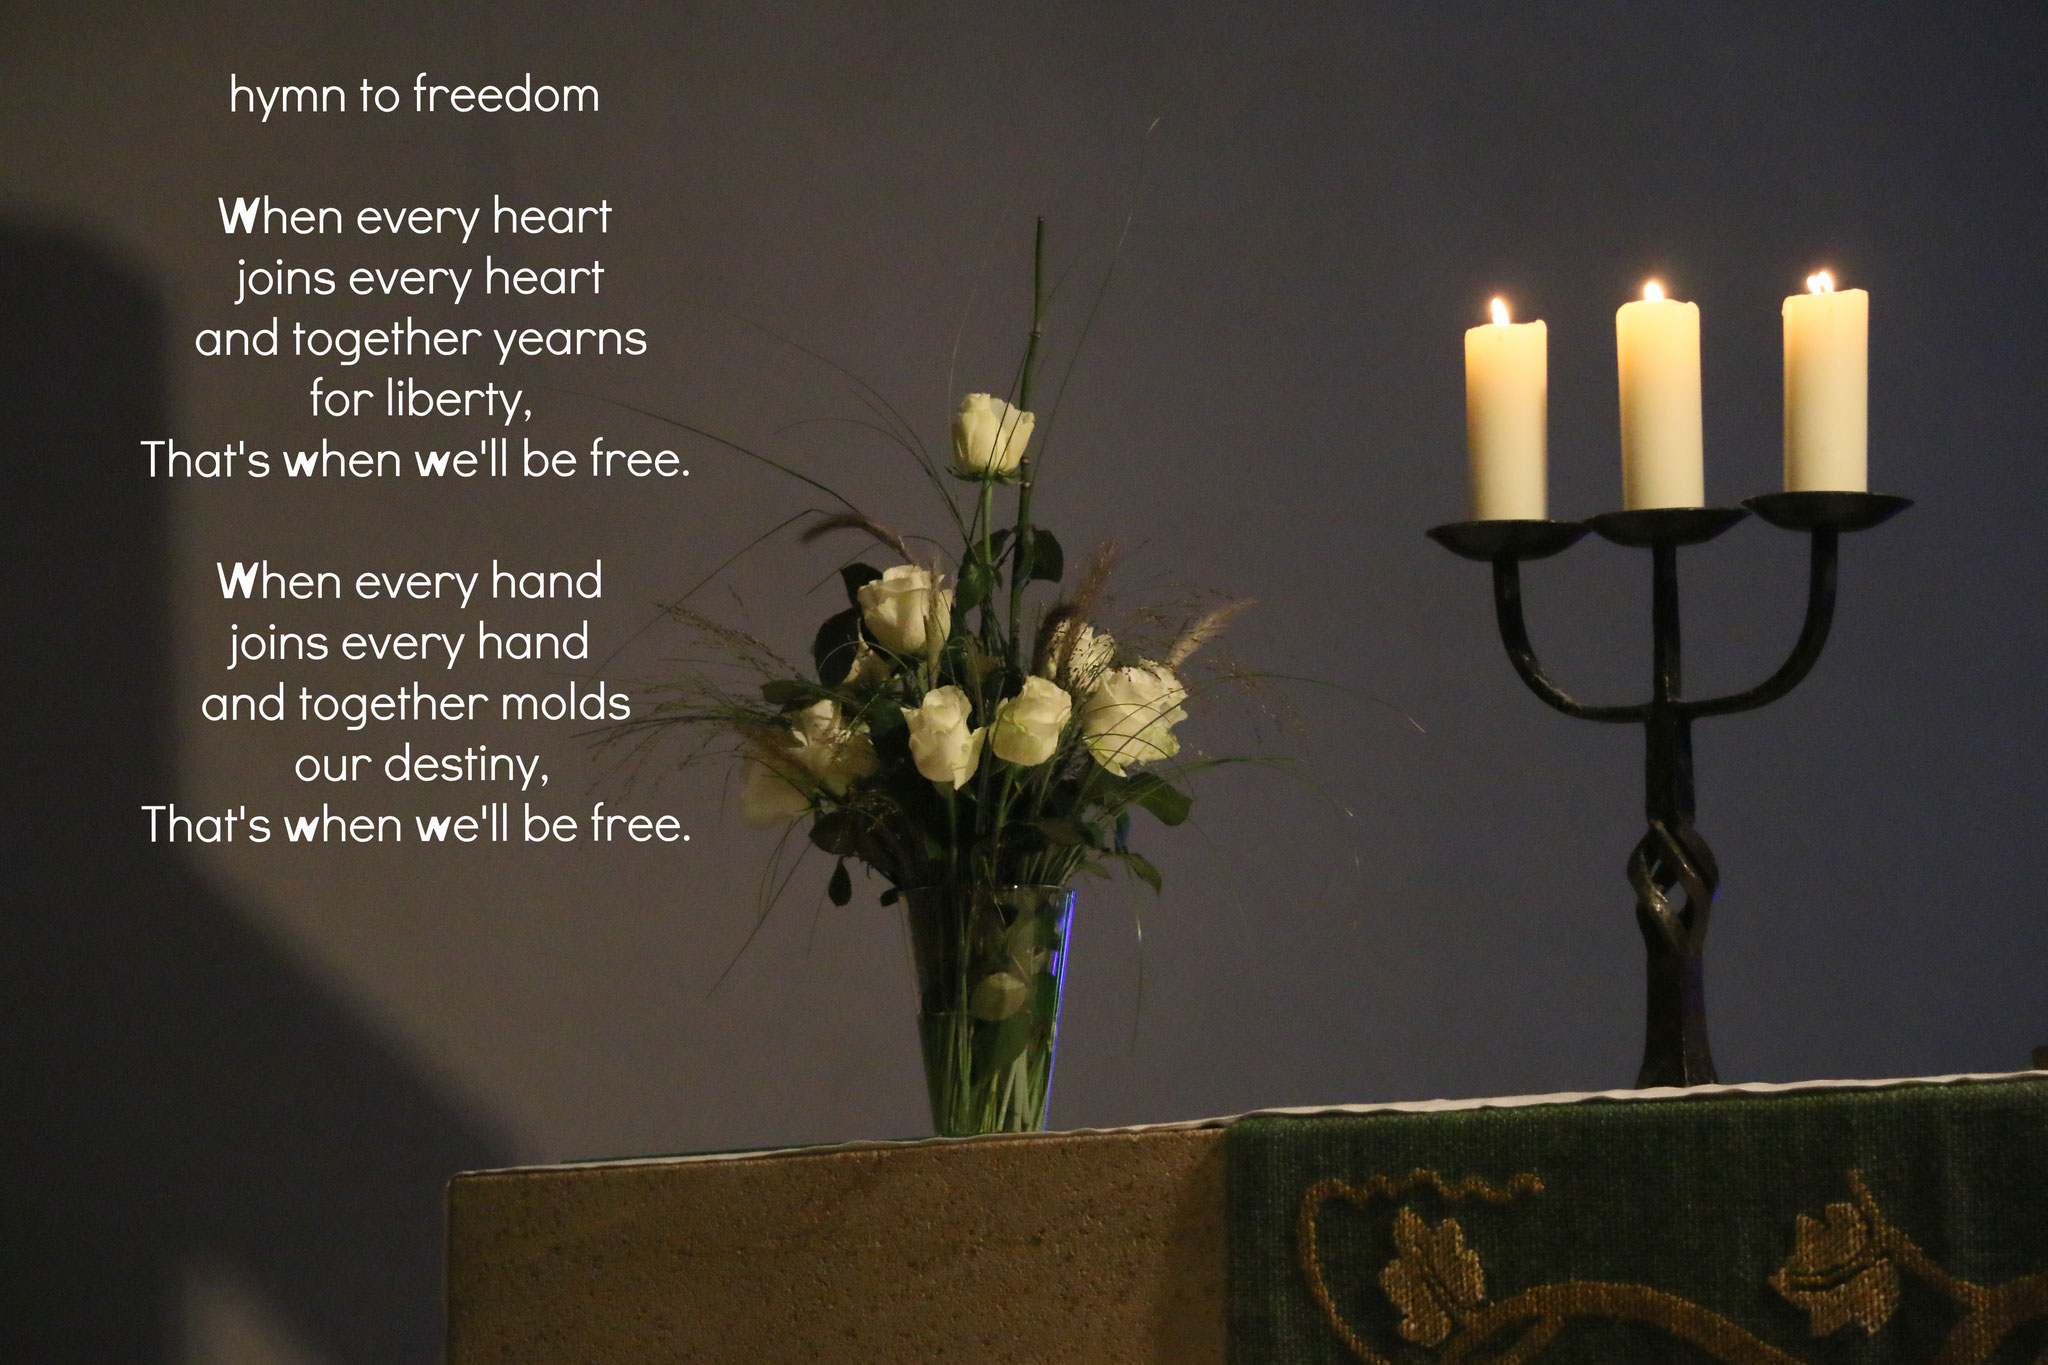 hymn to freedom